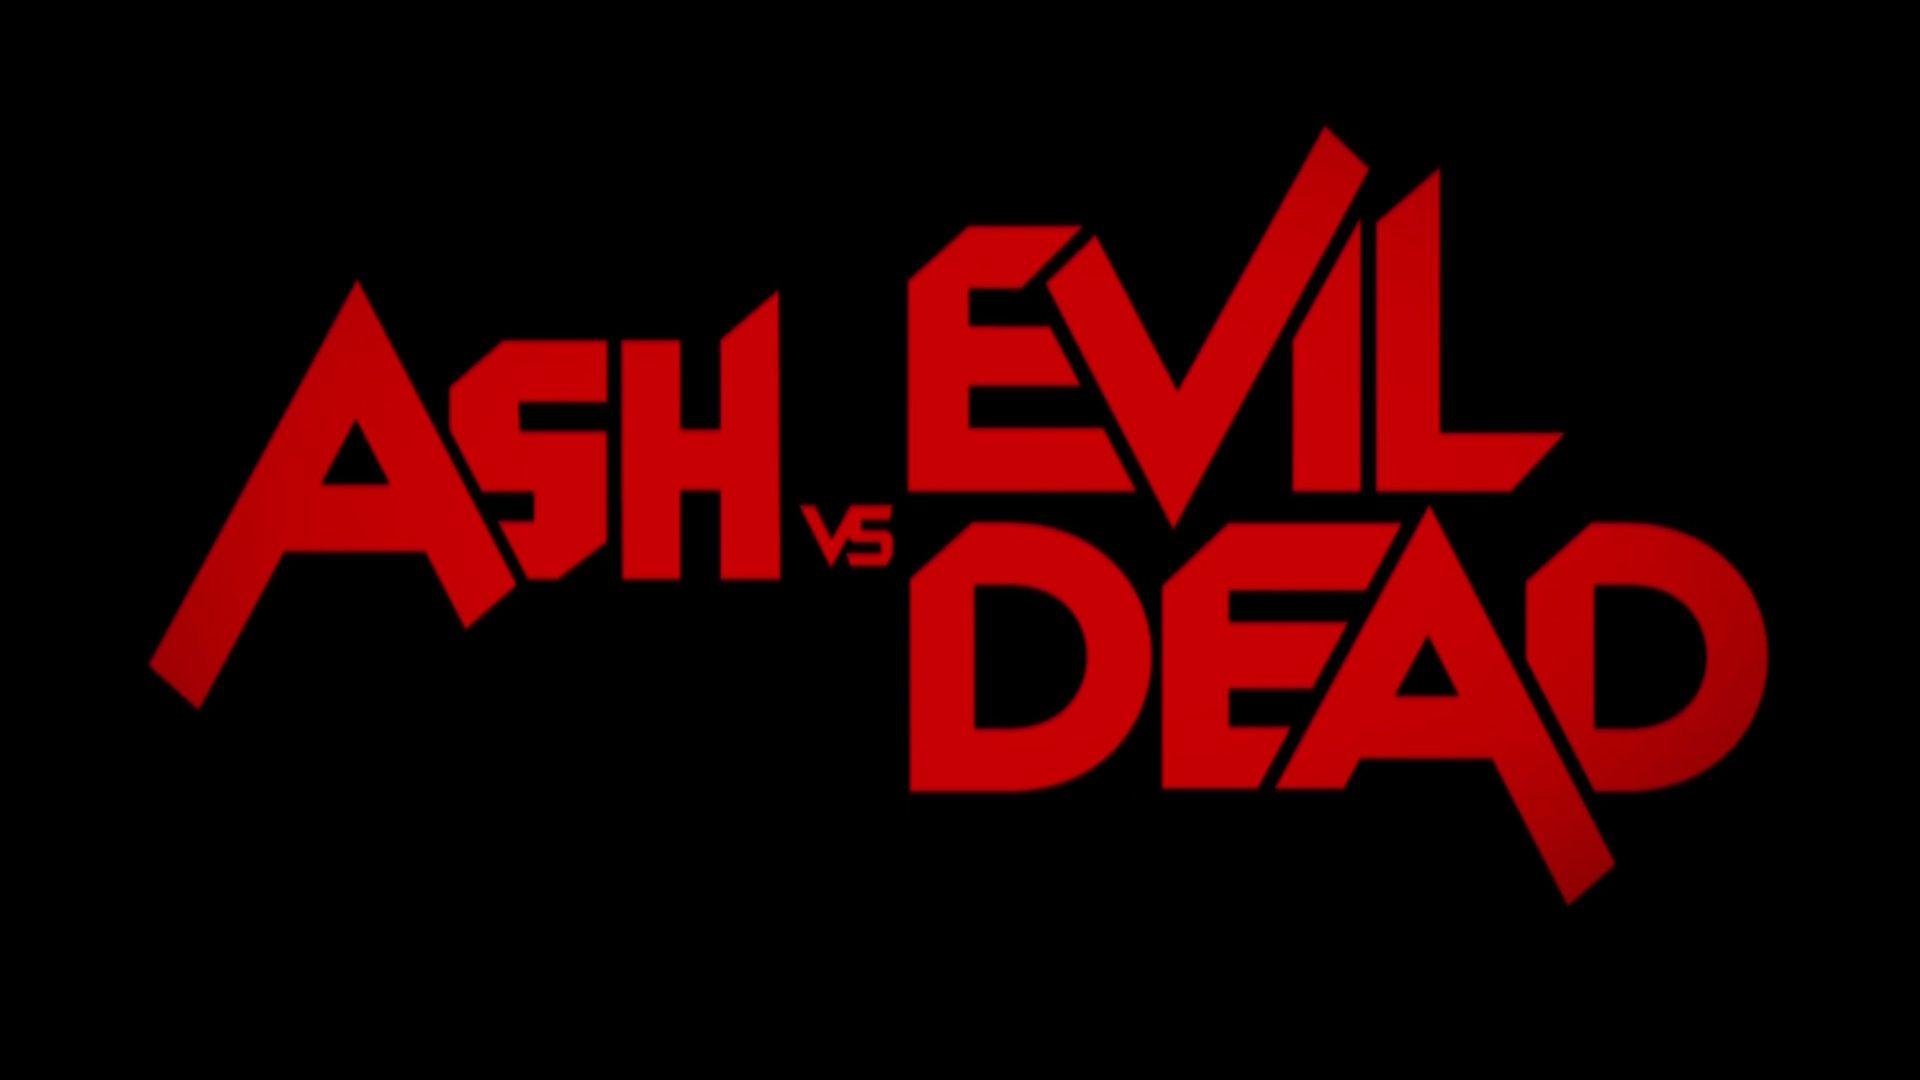 Ash vs Evil Dead premieres on Starz. Ace of Geeks